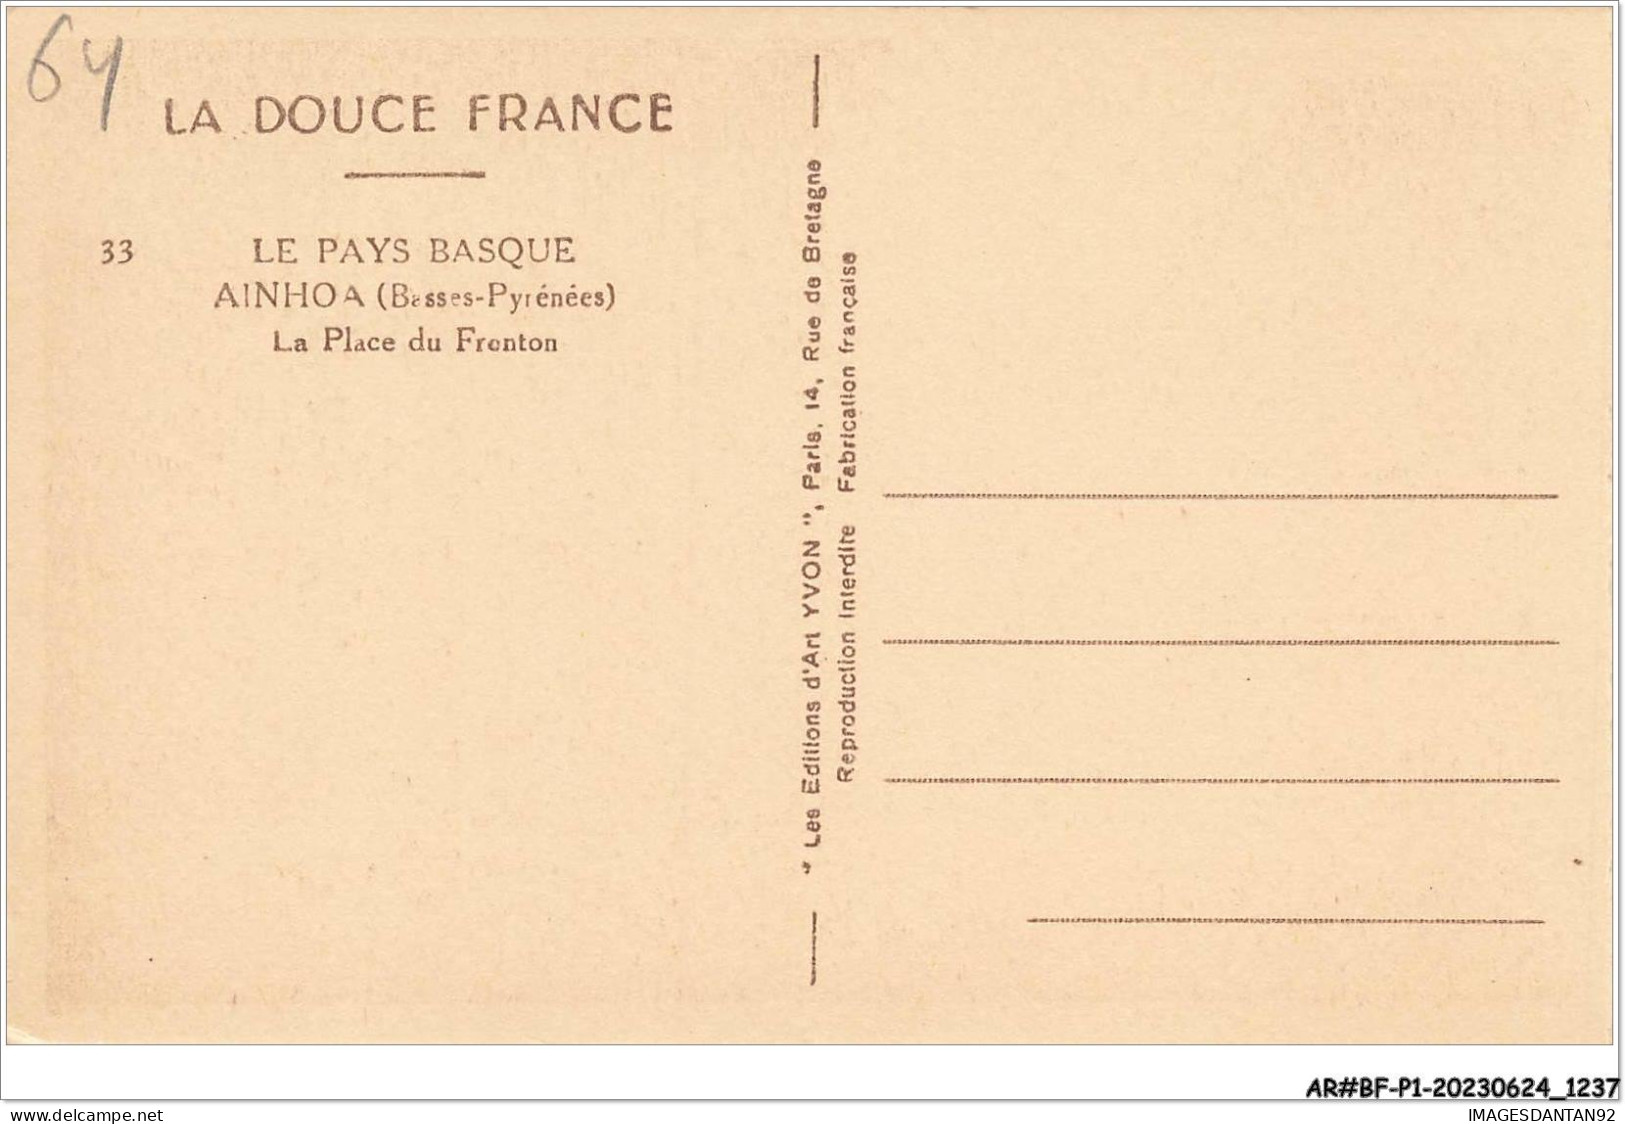 AR#BFP1-64-0619 - La Douce France - AINHOA - La Place Du Fronton - Ainhoa